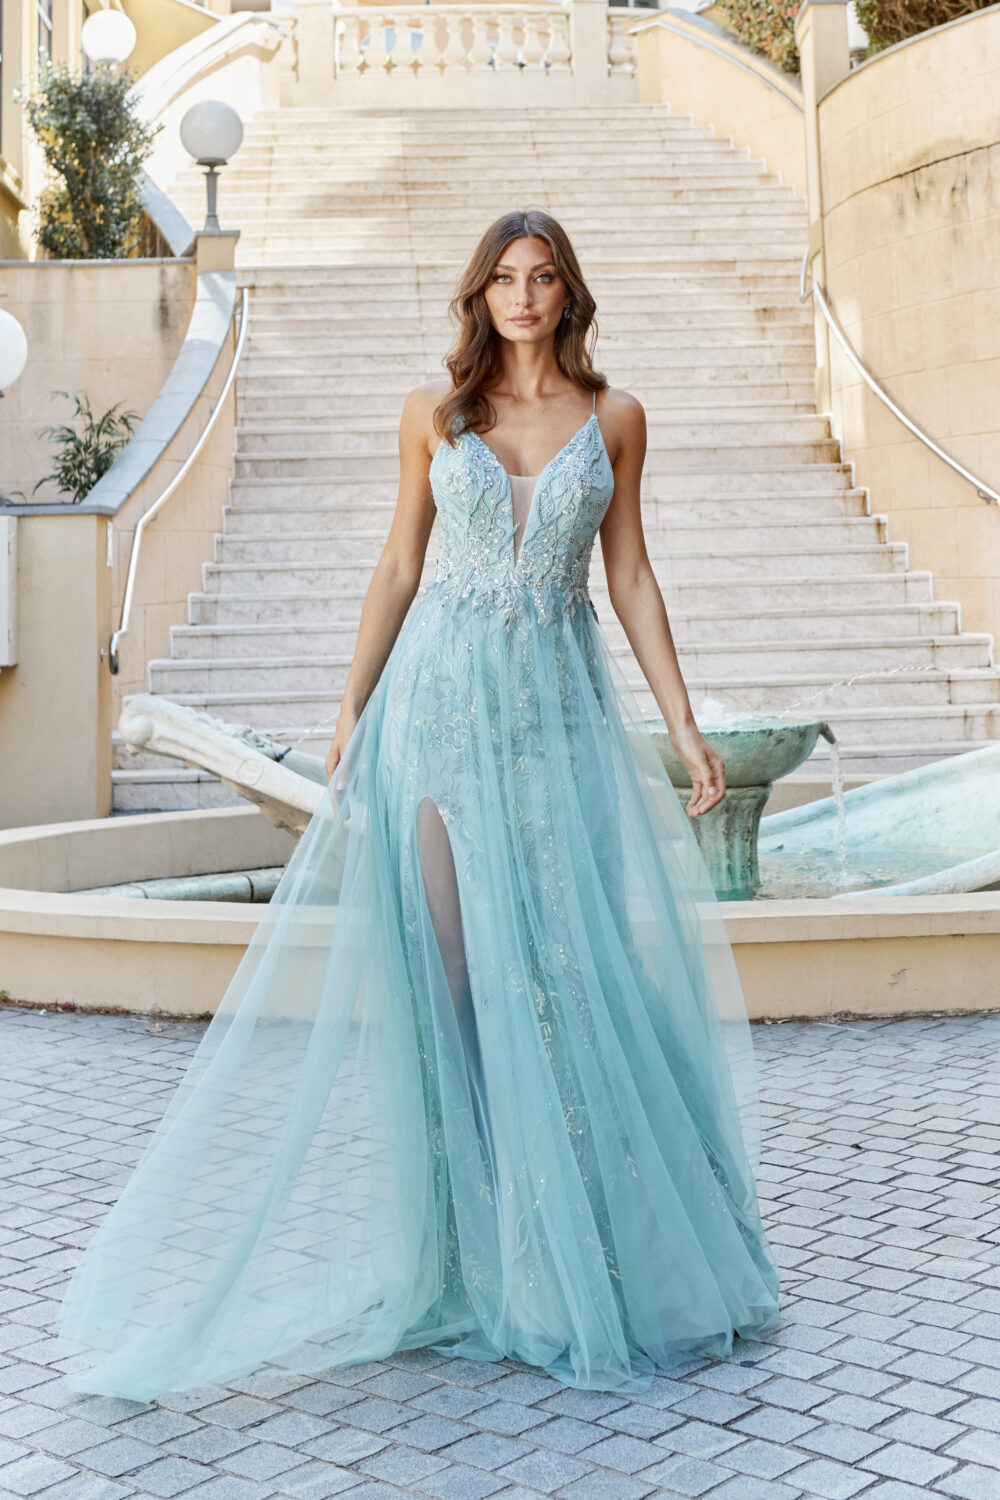 CYNTHIA PO954 Evening & Formal dress by Tania Olsen Designs